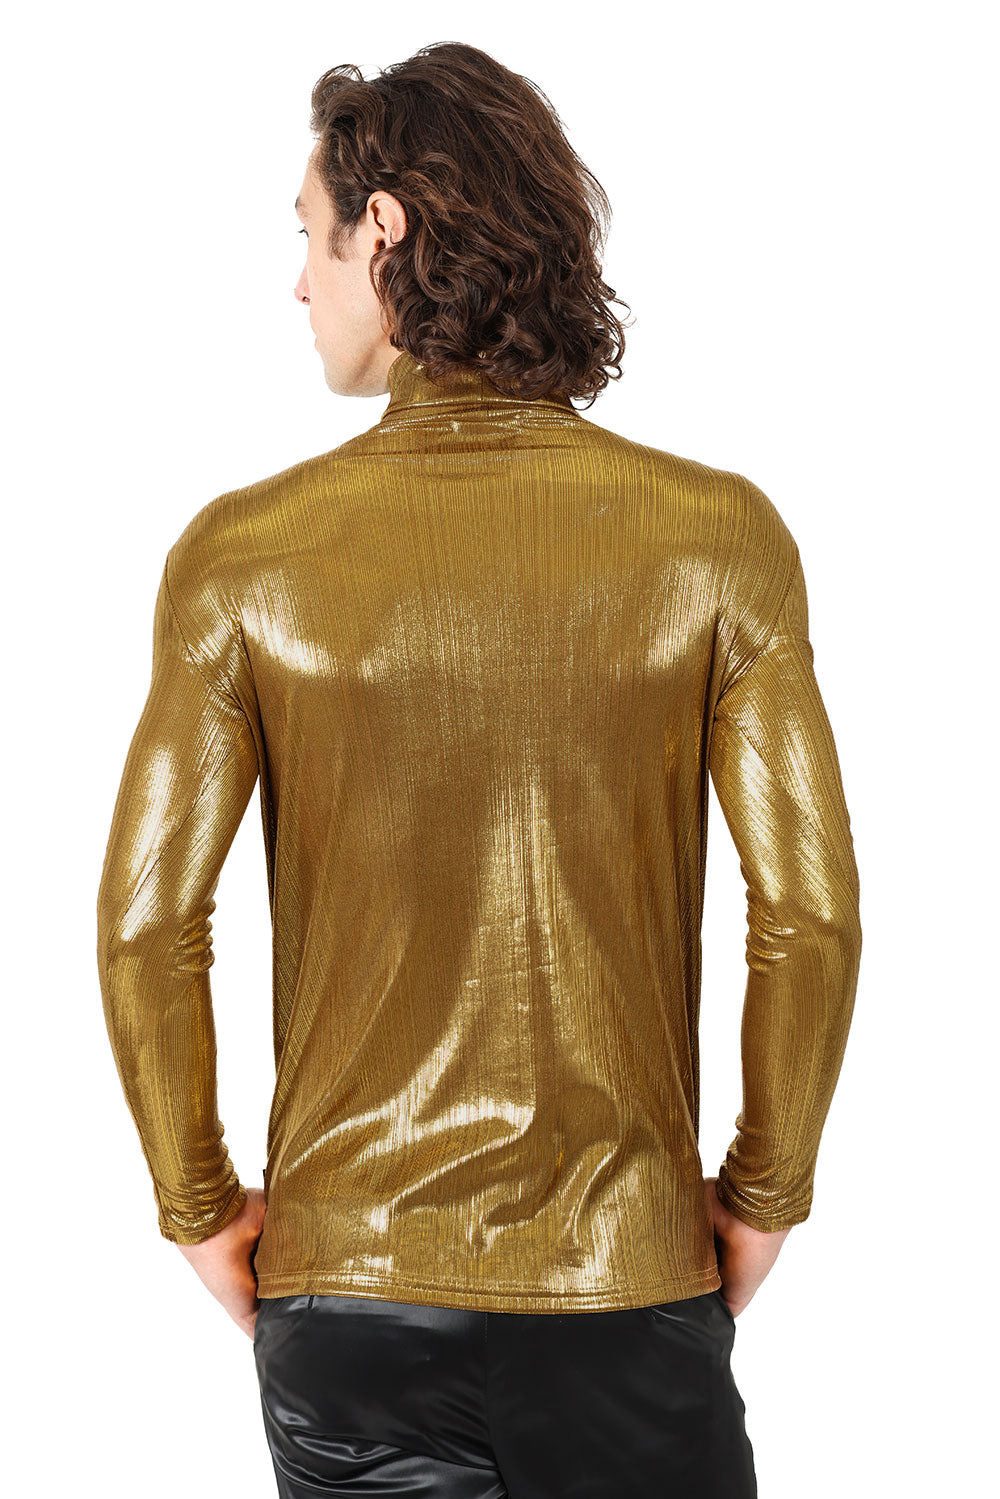 Barabas Men's Metallic Shiny Long Sleeve Turtleneck Sweater 2KT1000 Gold